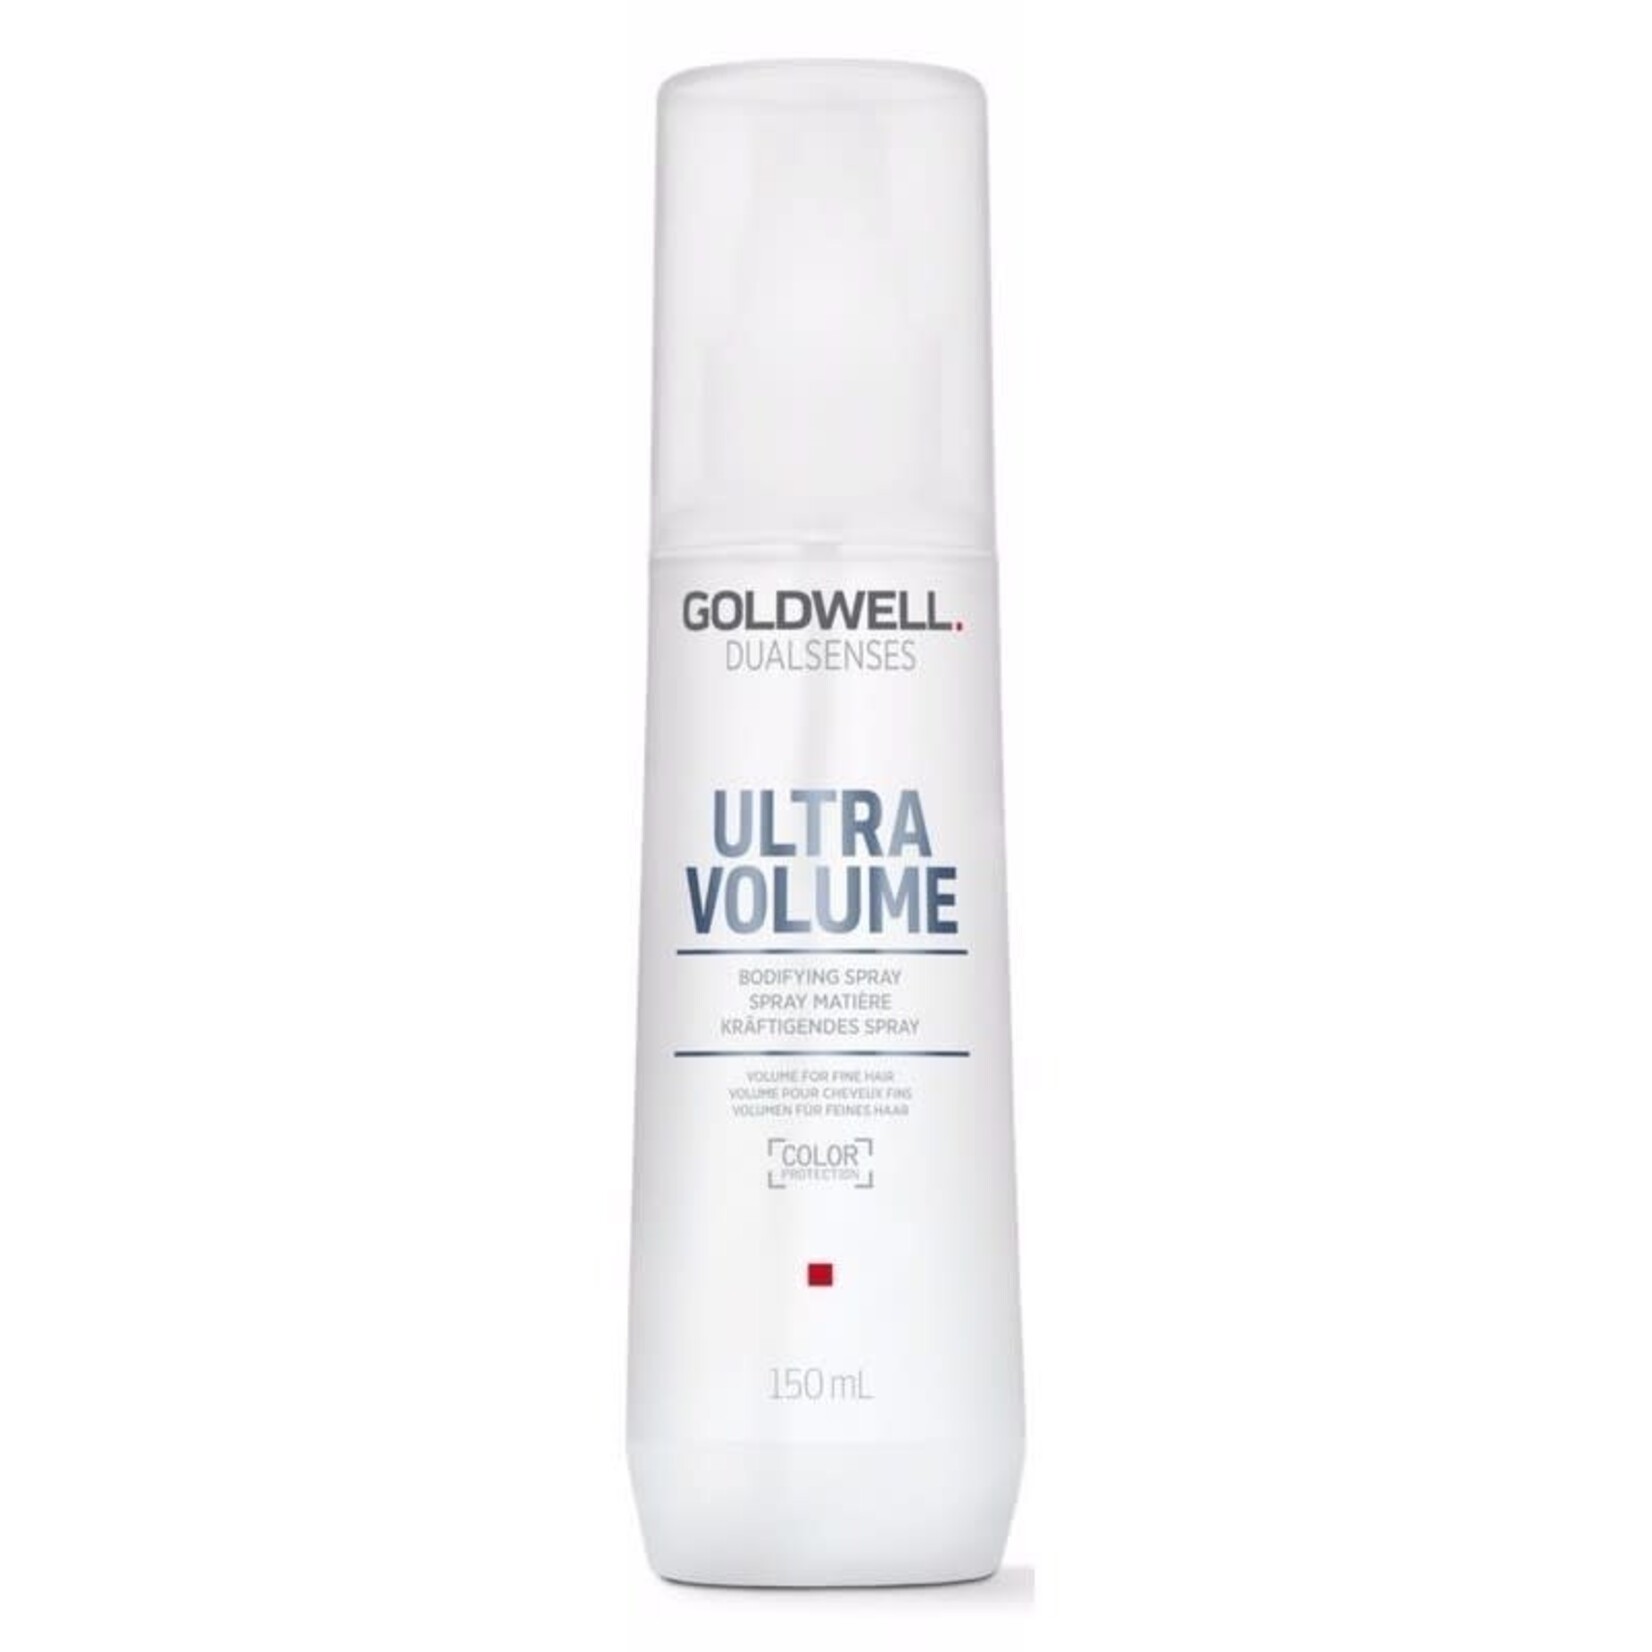 Goldwell Goldwell - Dualsenses - Ultra Volume - Bodyfying Spray 150ml